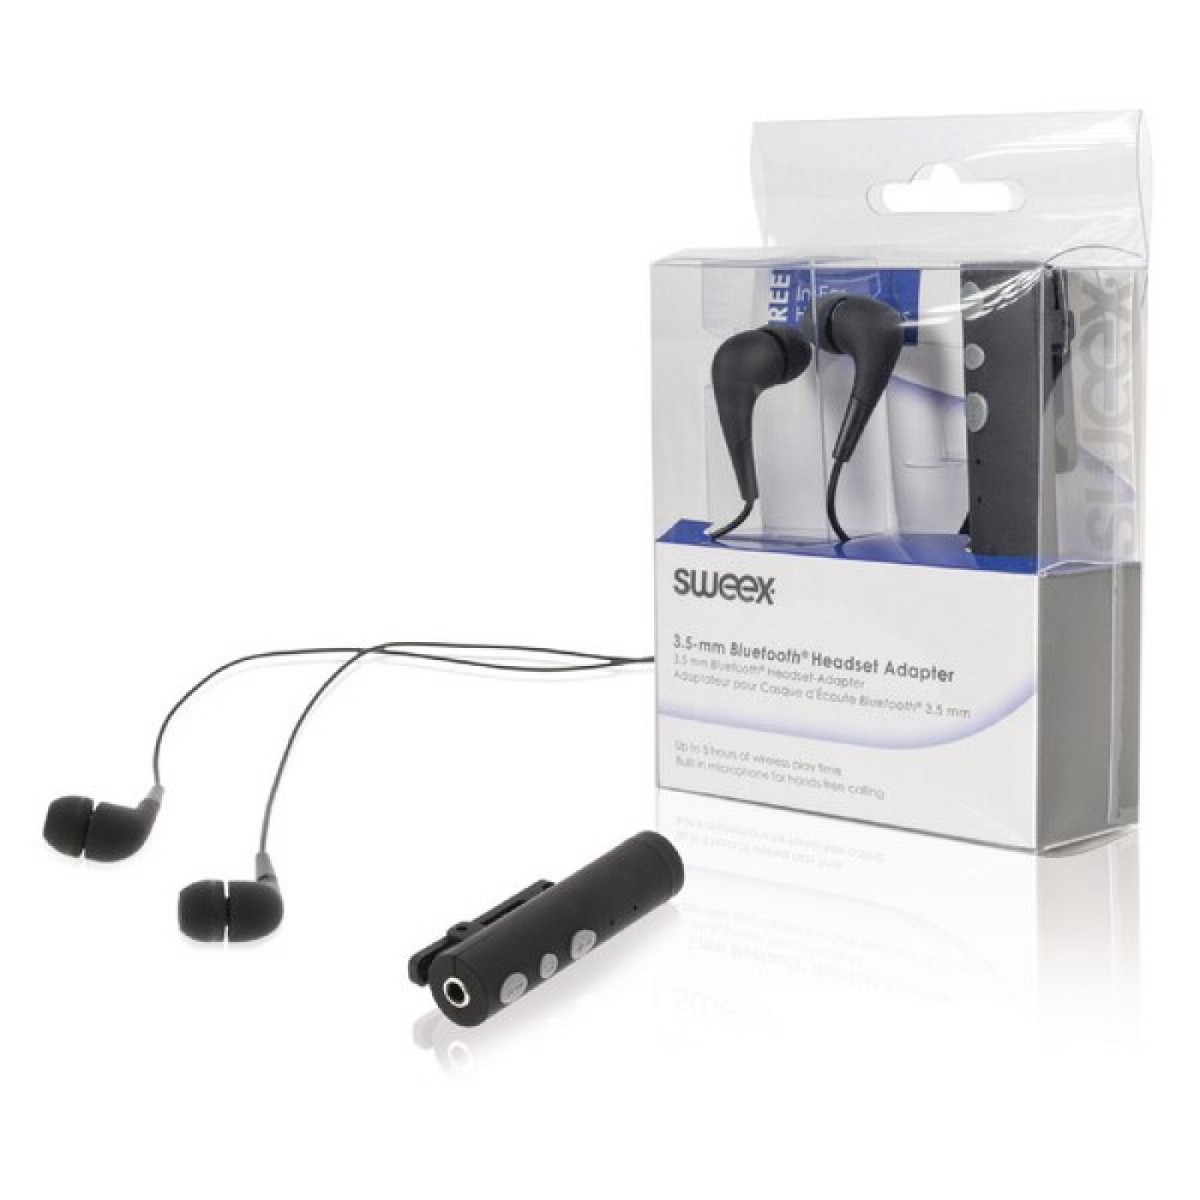 Sweex 3.5mm Bluetooth Headset Adaptor - Dartmoor Photographic Ltd.